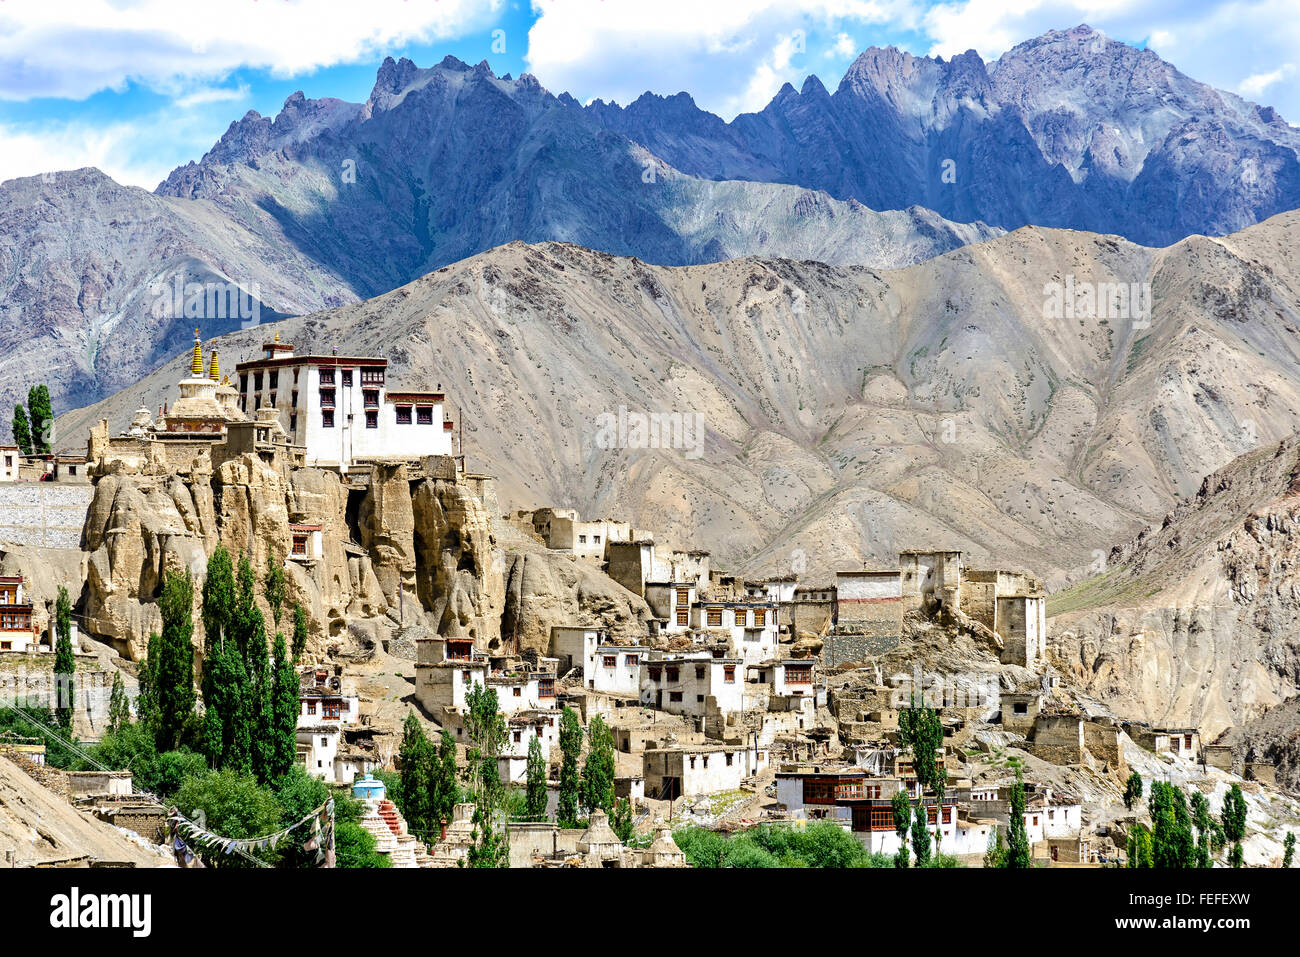 Vista panoramica del monastero di Lamayuru in Ladakh, India. Foto Stock